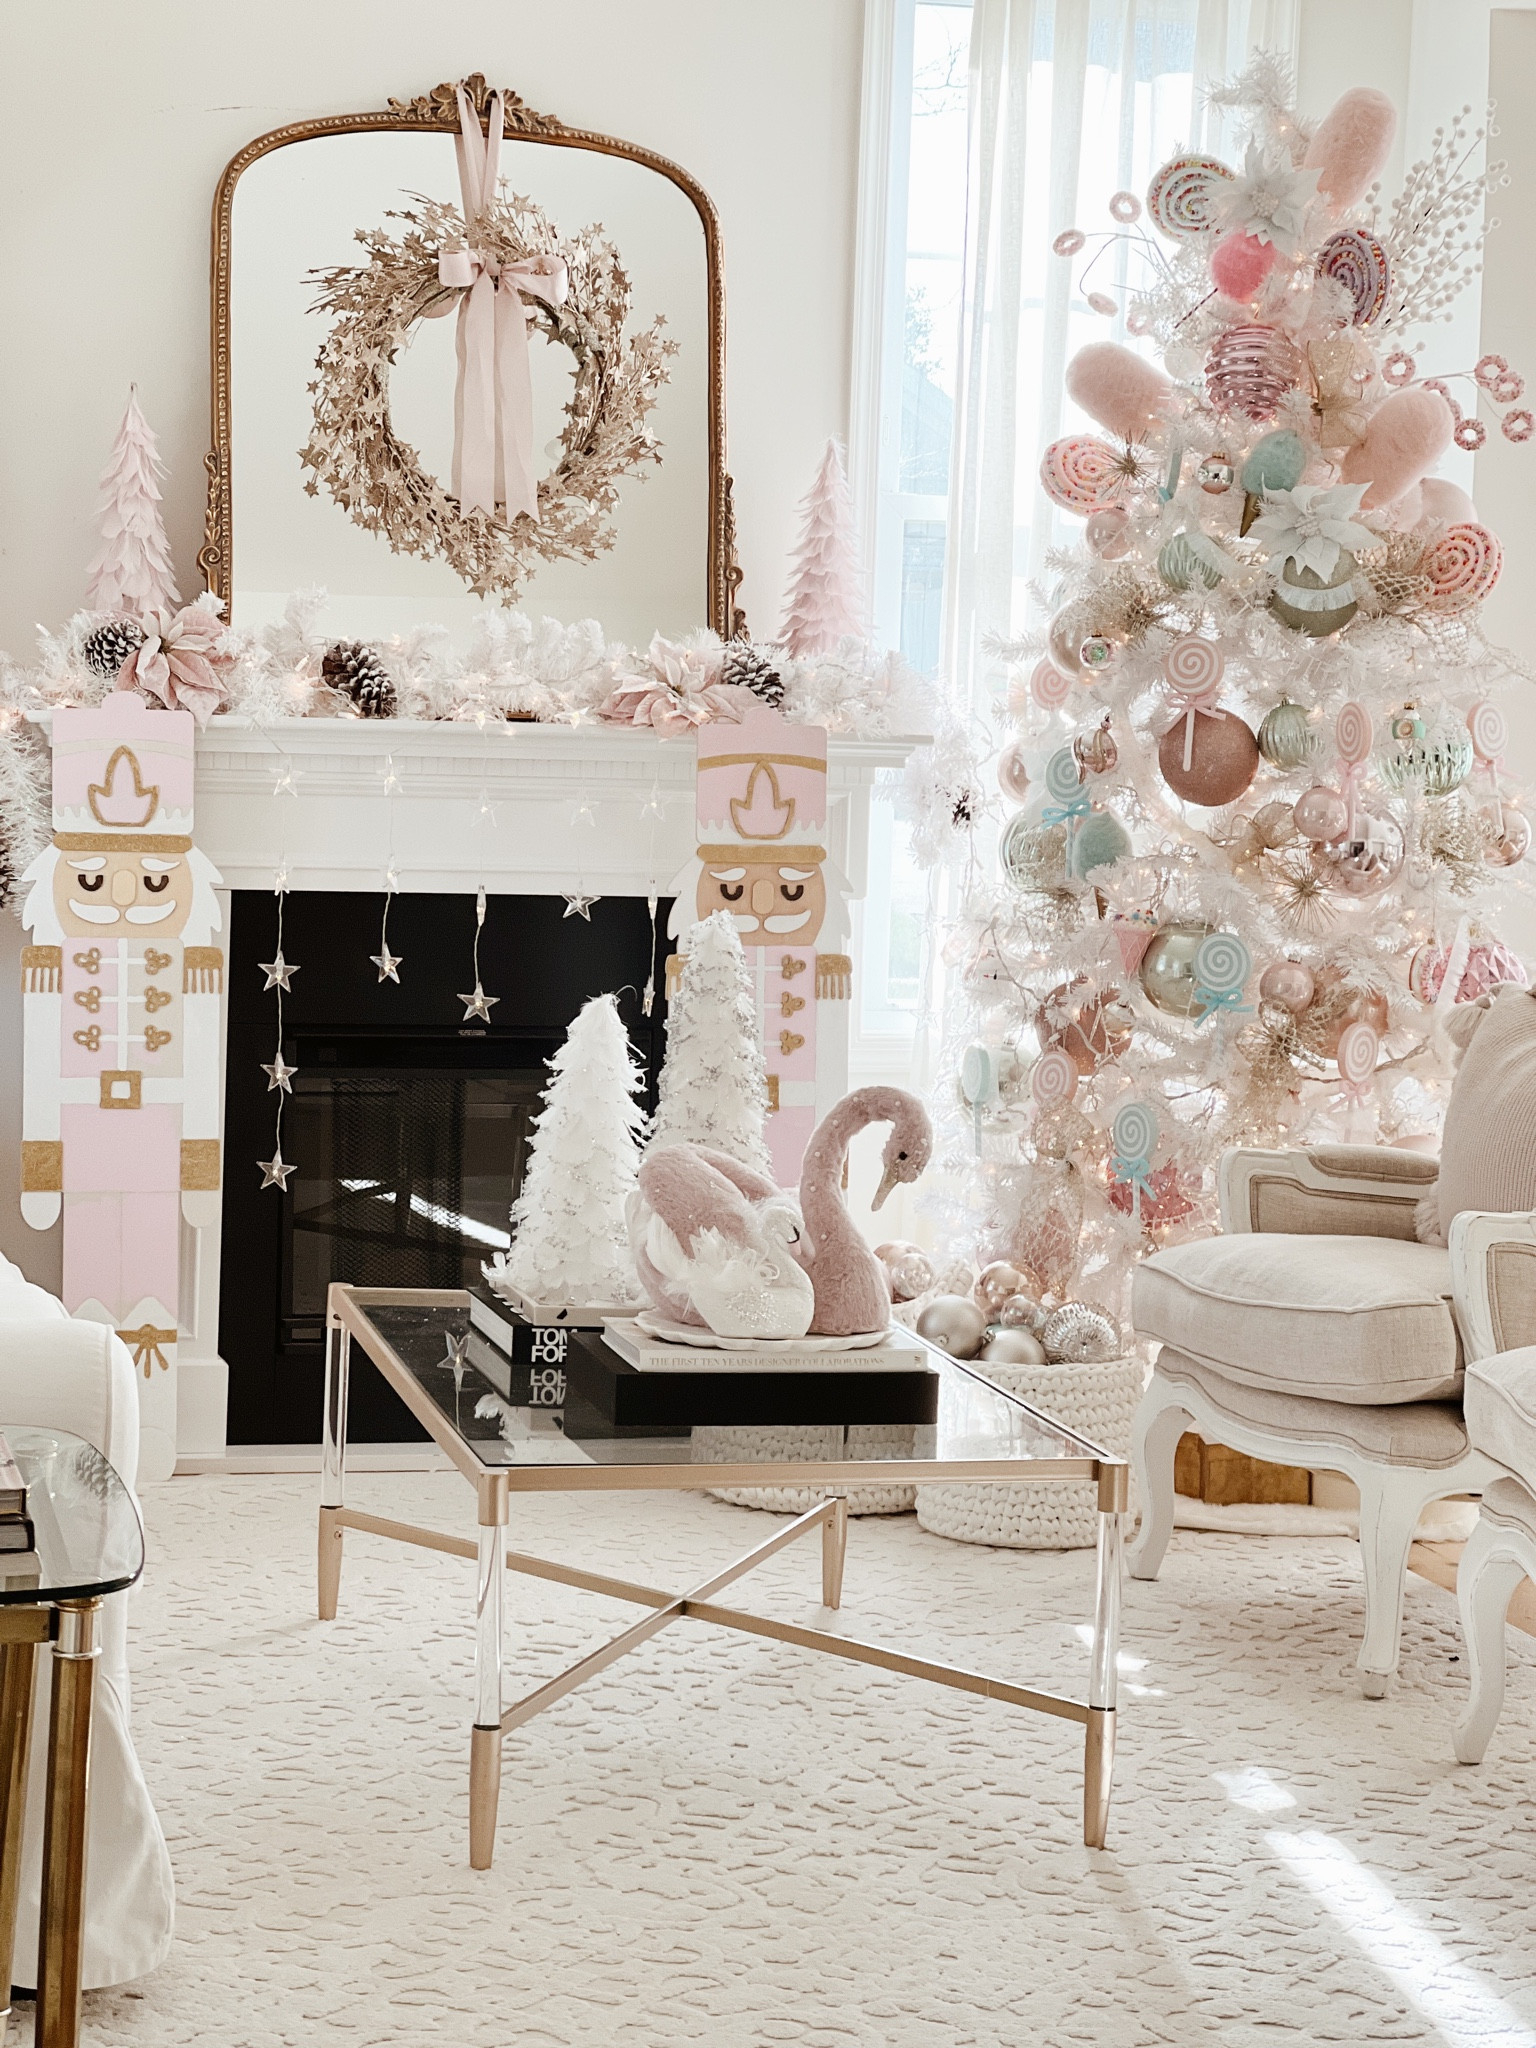 Buy Indoor Snowballs Christmas Decorations 16 Pk - FabFinds